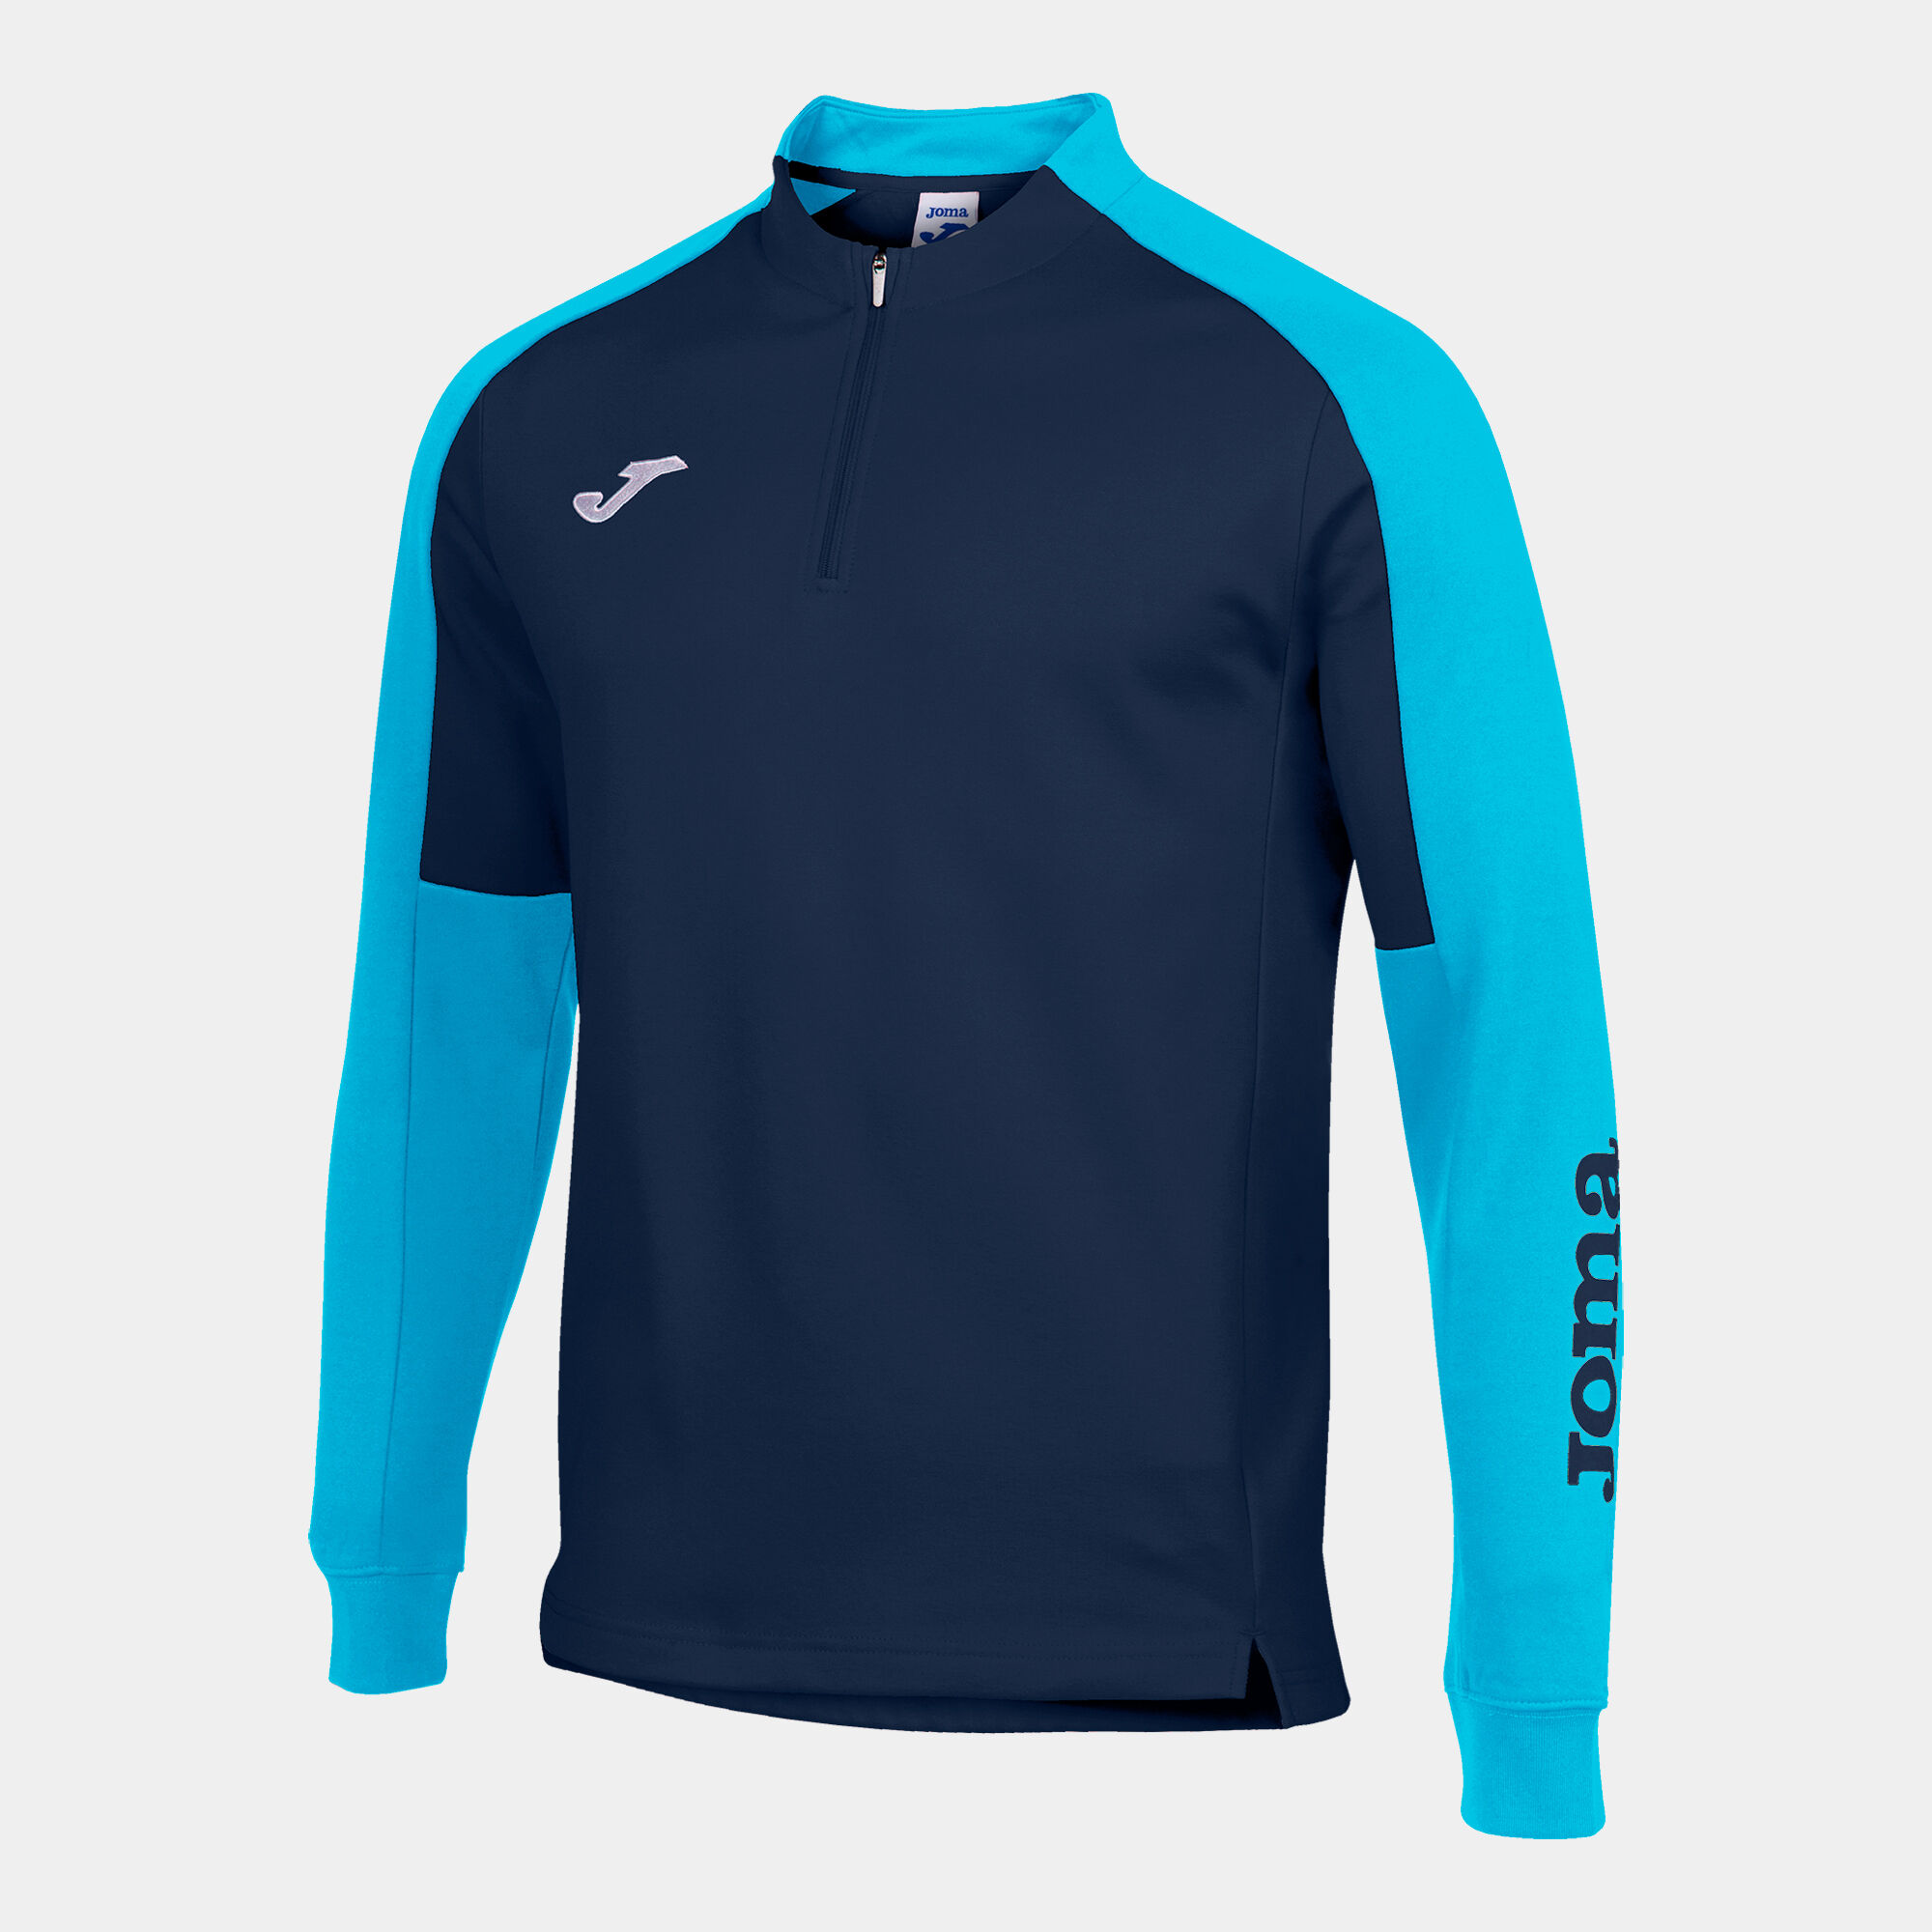 Sweat-shirt homme Eco Championship bleu marine turquoise fluo